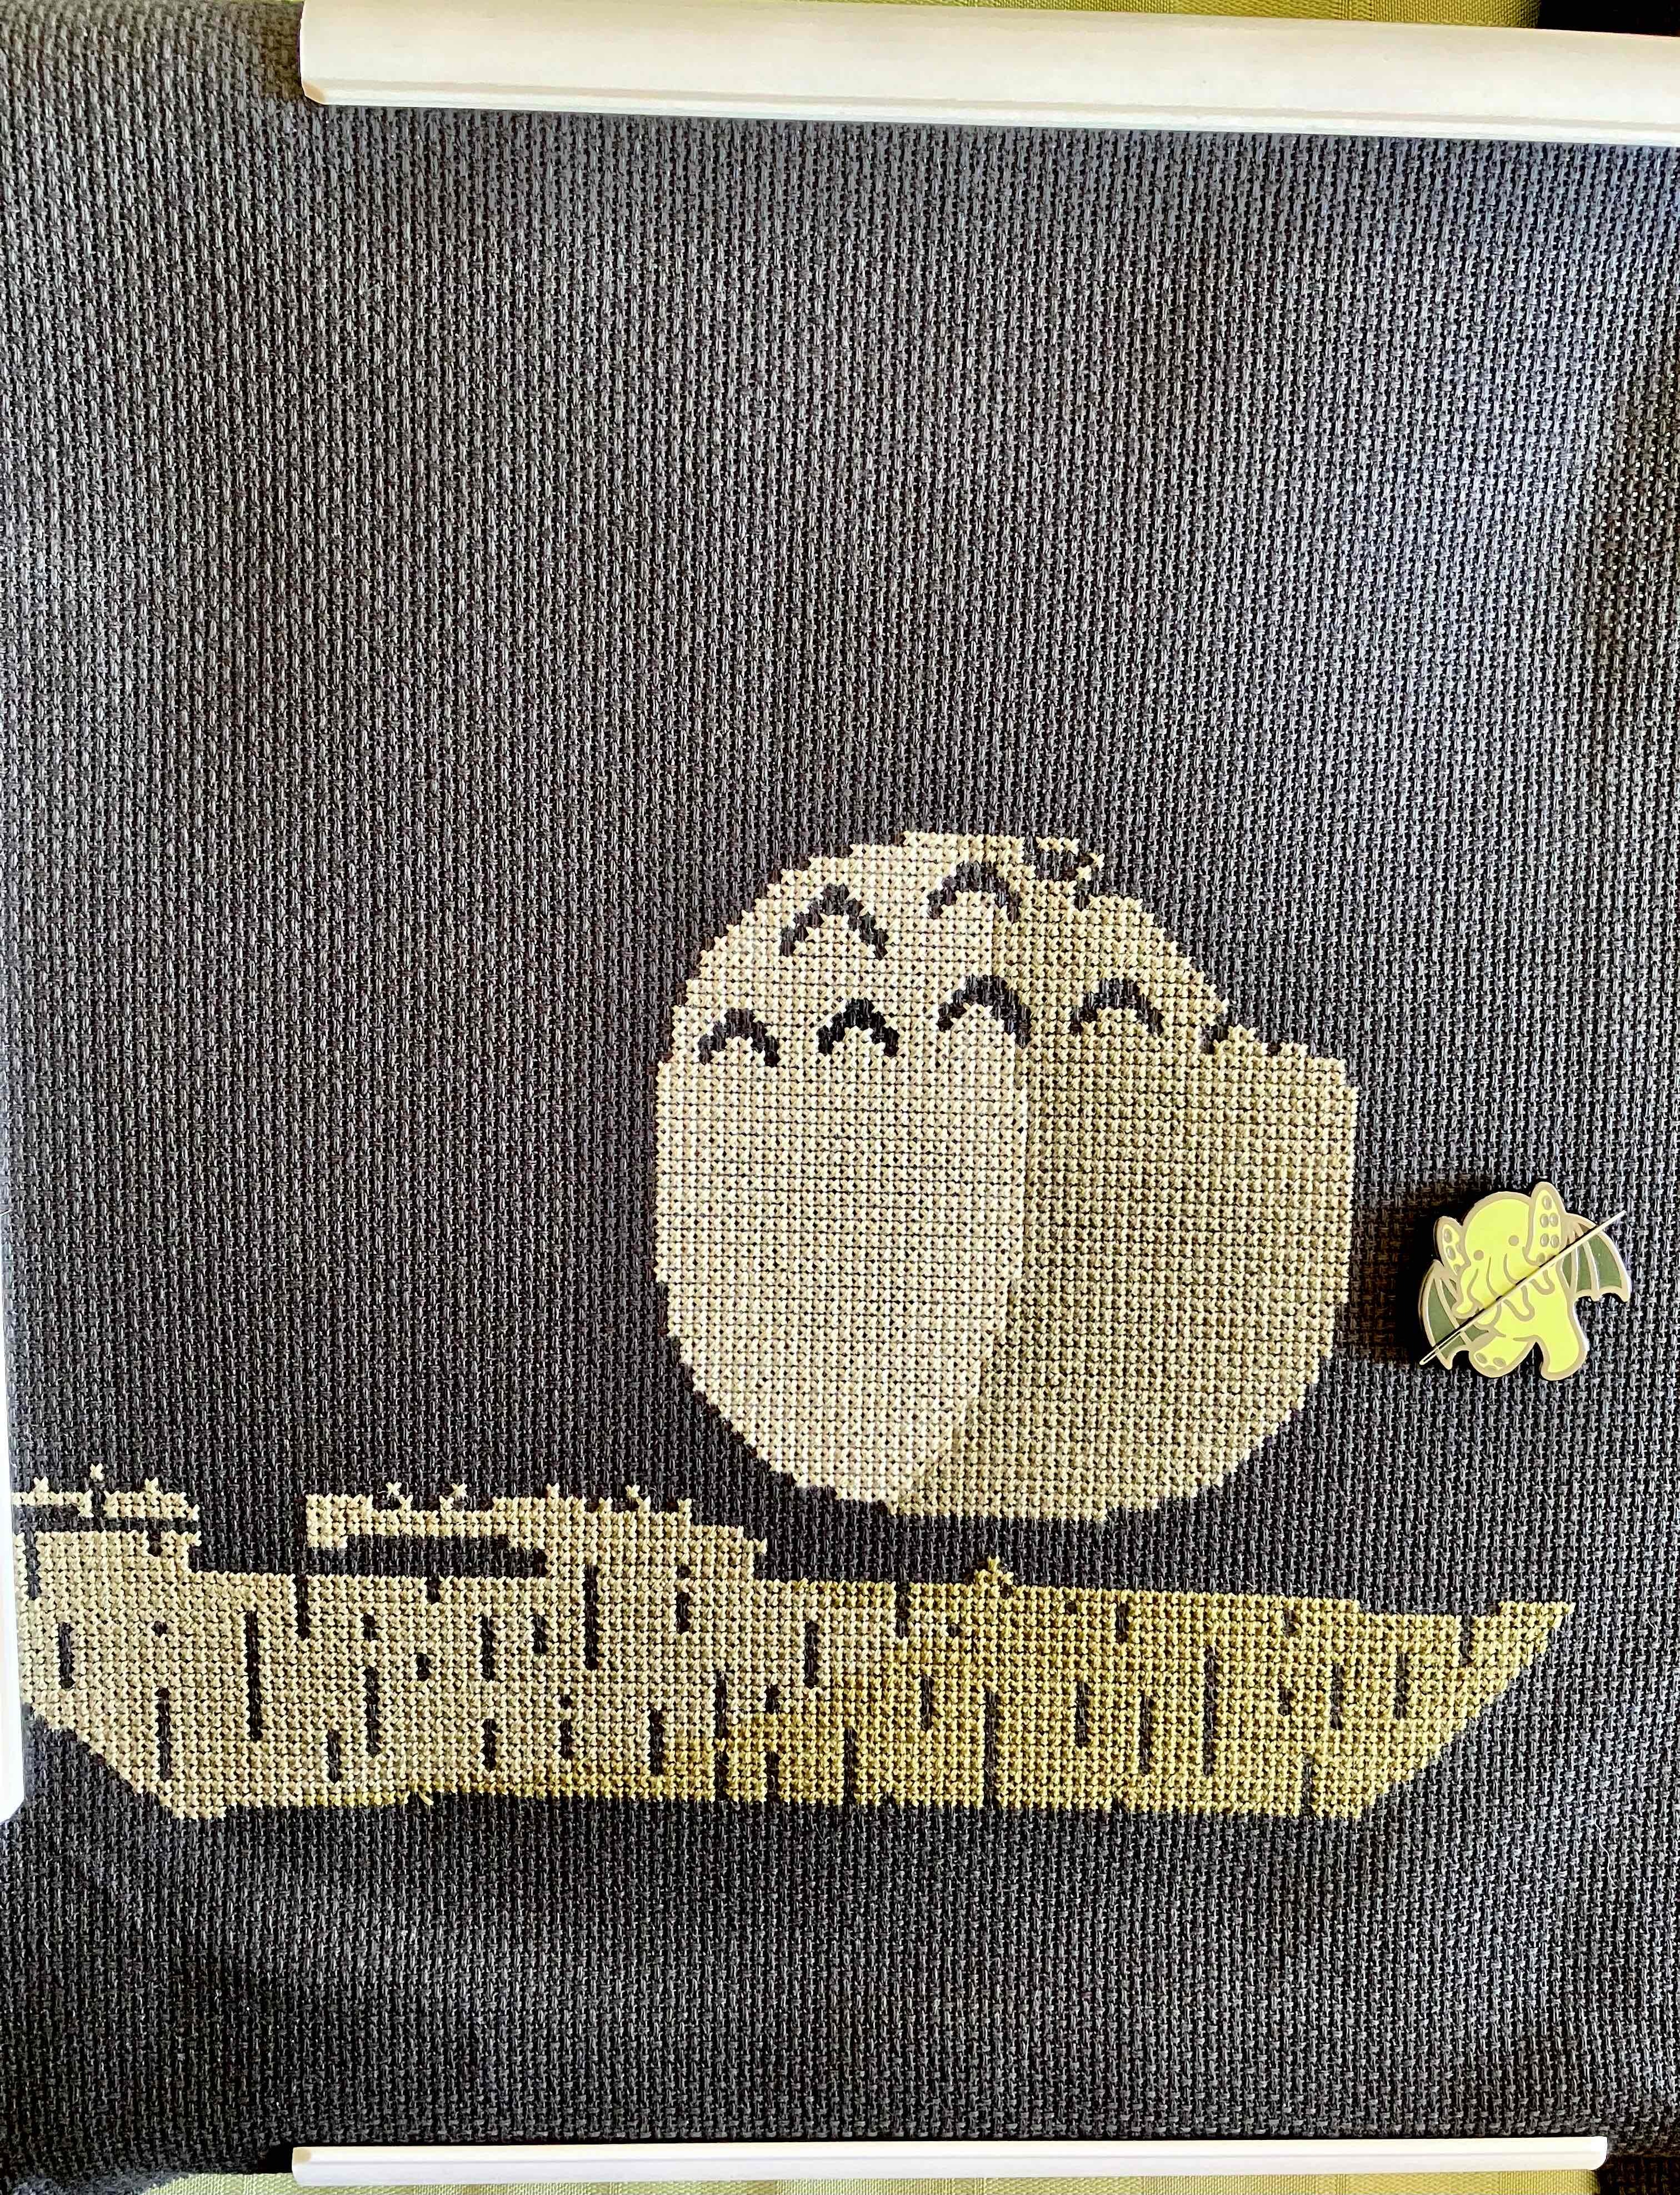 Totoro stitch